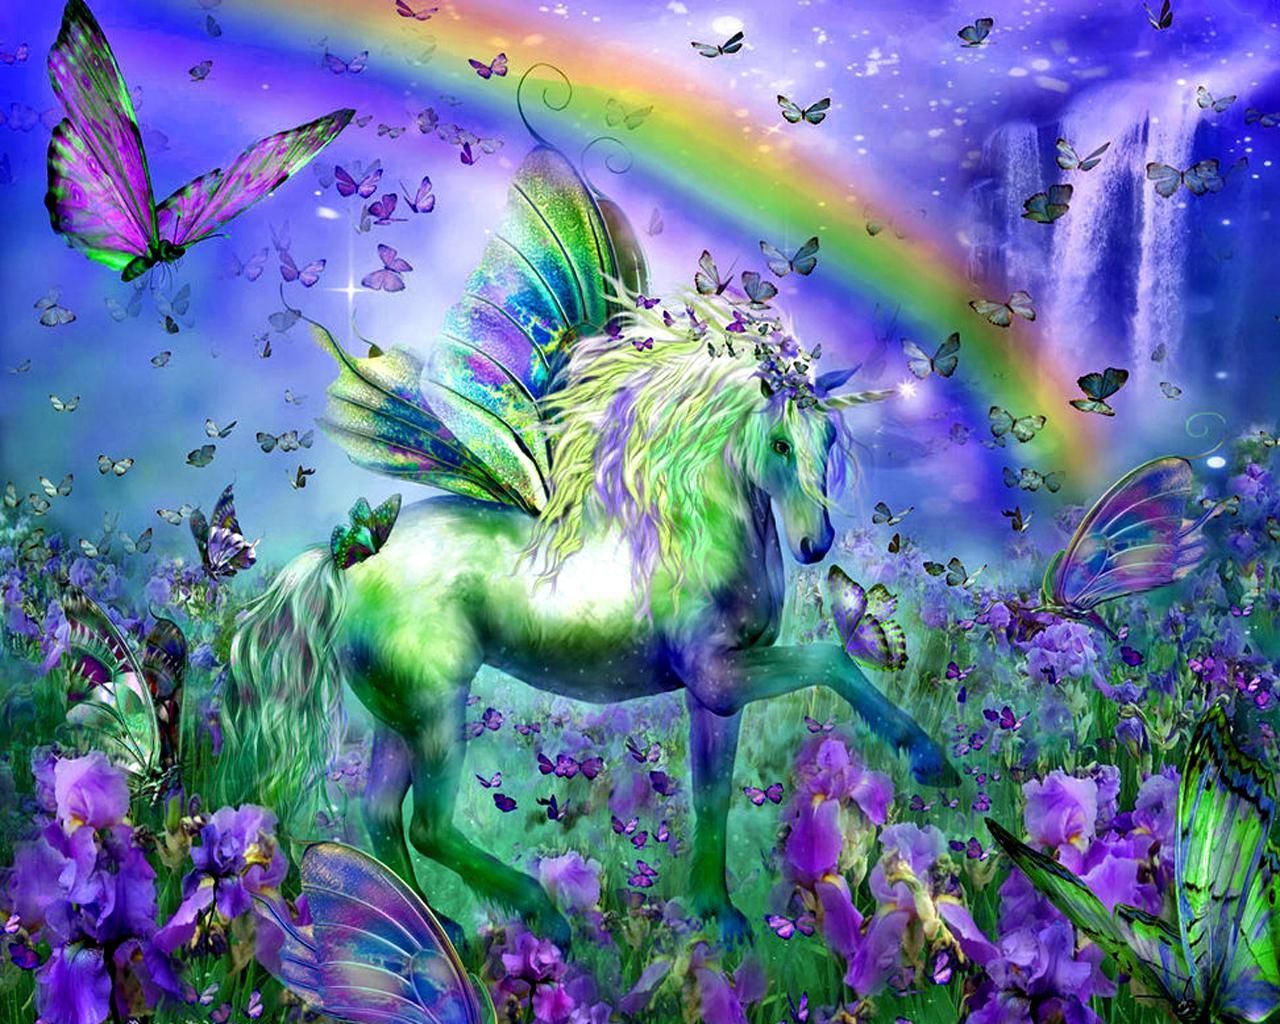 Unicorn and Fairy Desktop Wallpaper